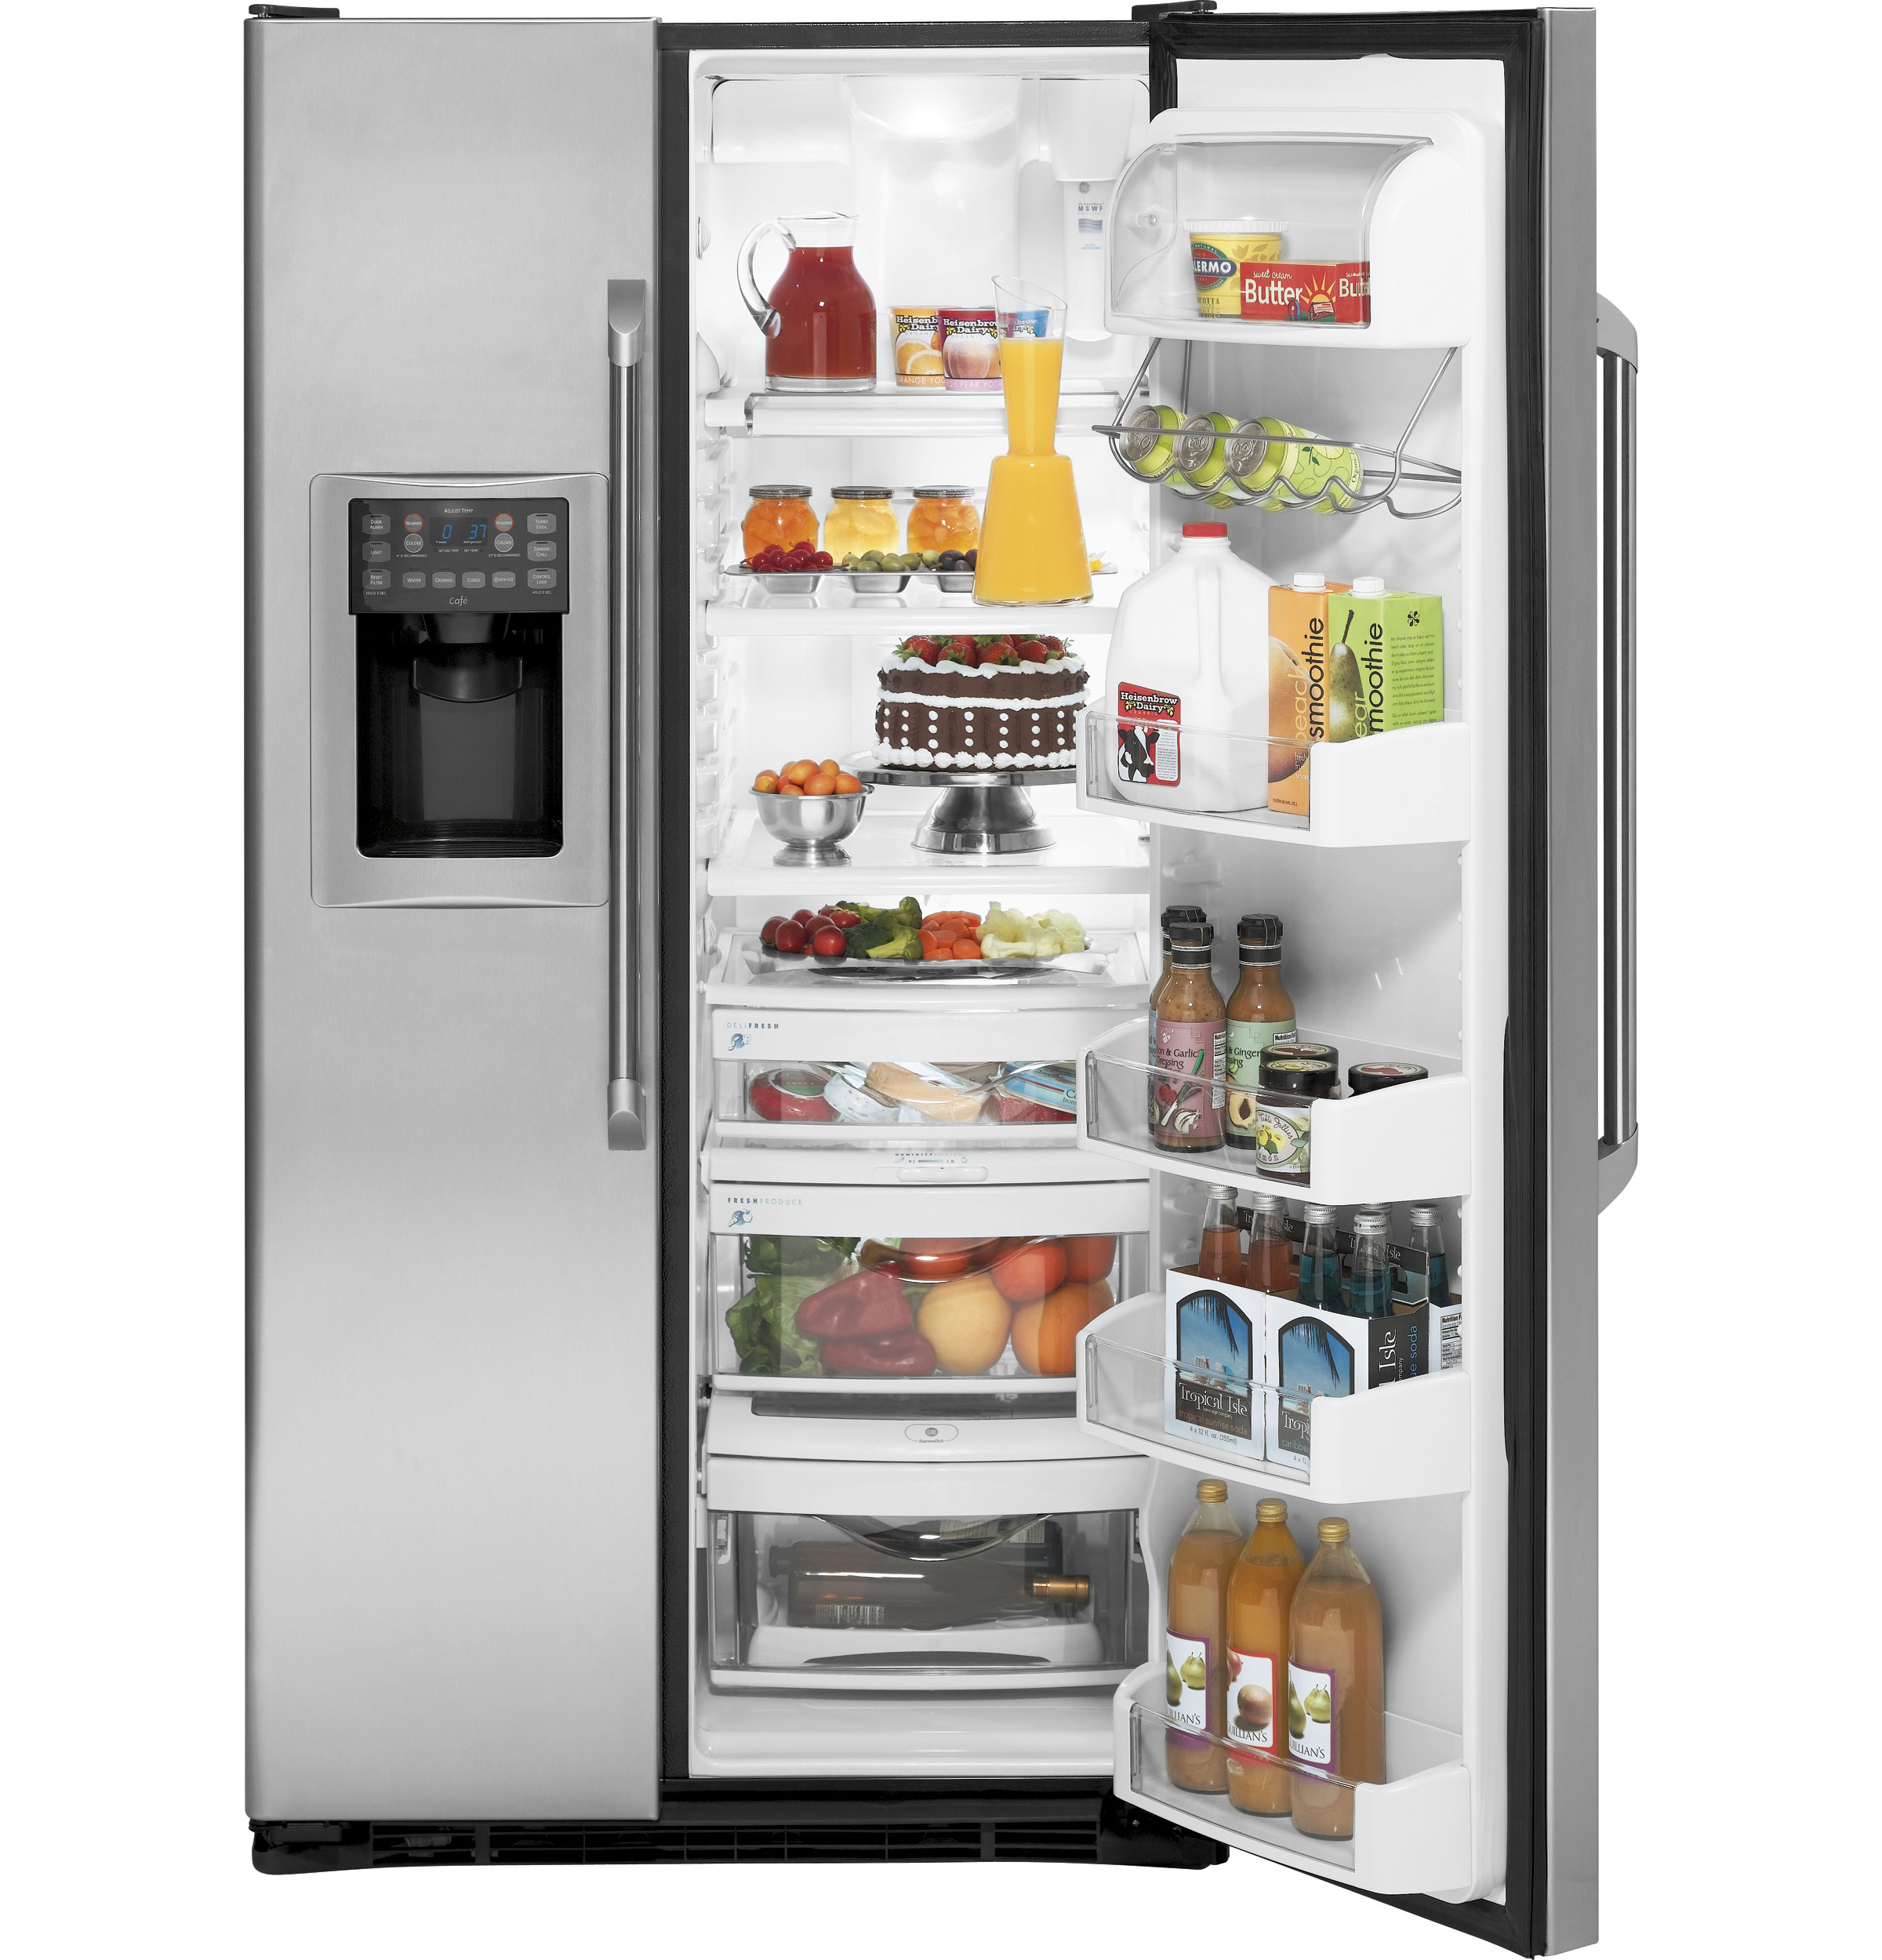 GE Café™ Series 25.4 Cu. Ft. Side-By-Side Refrigerator